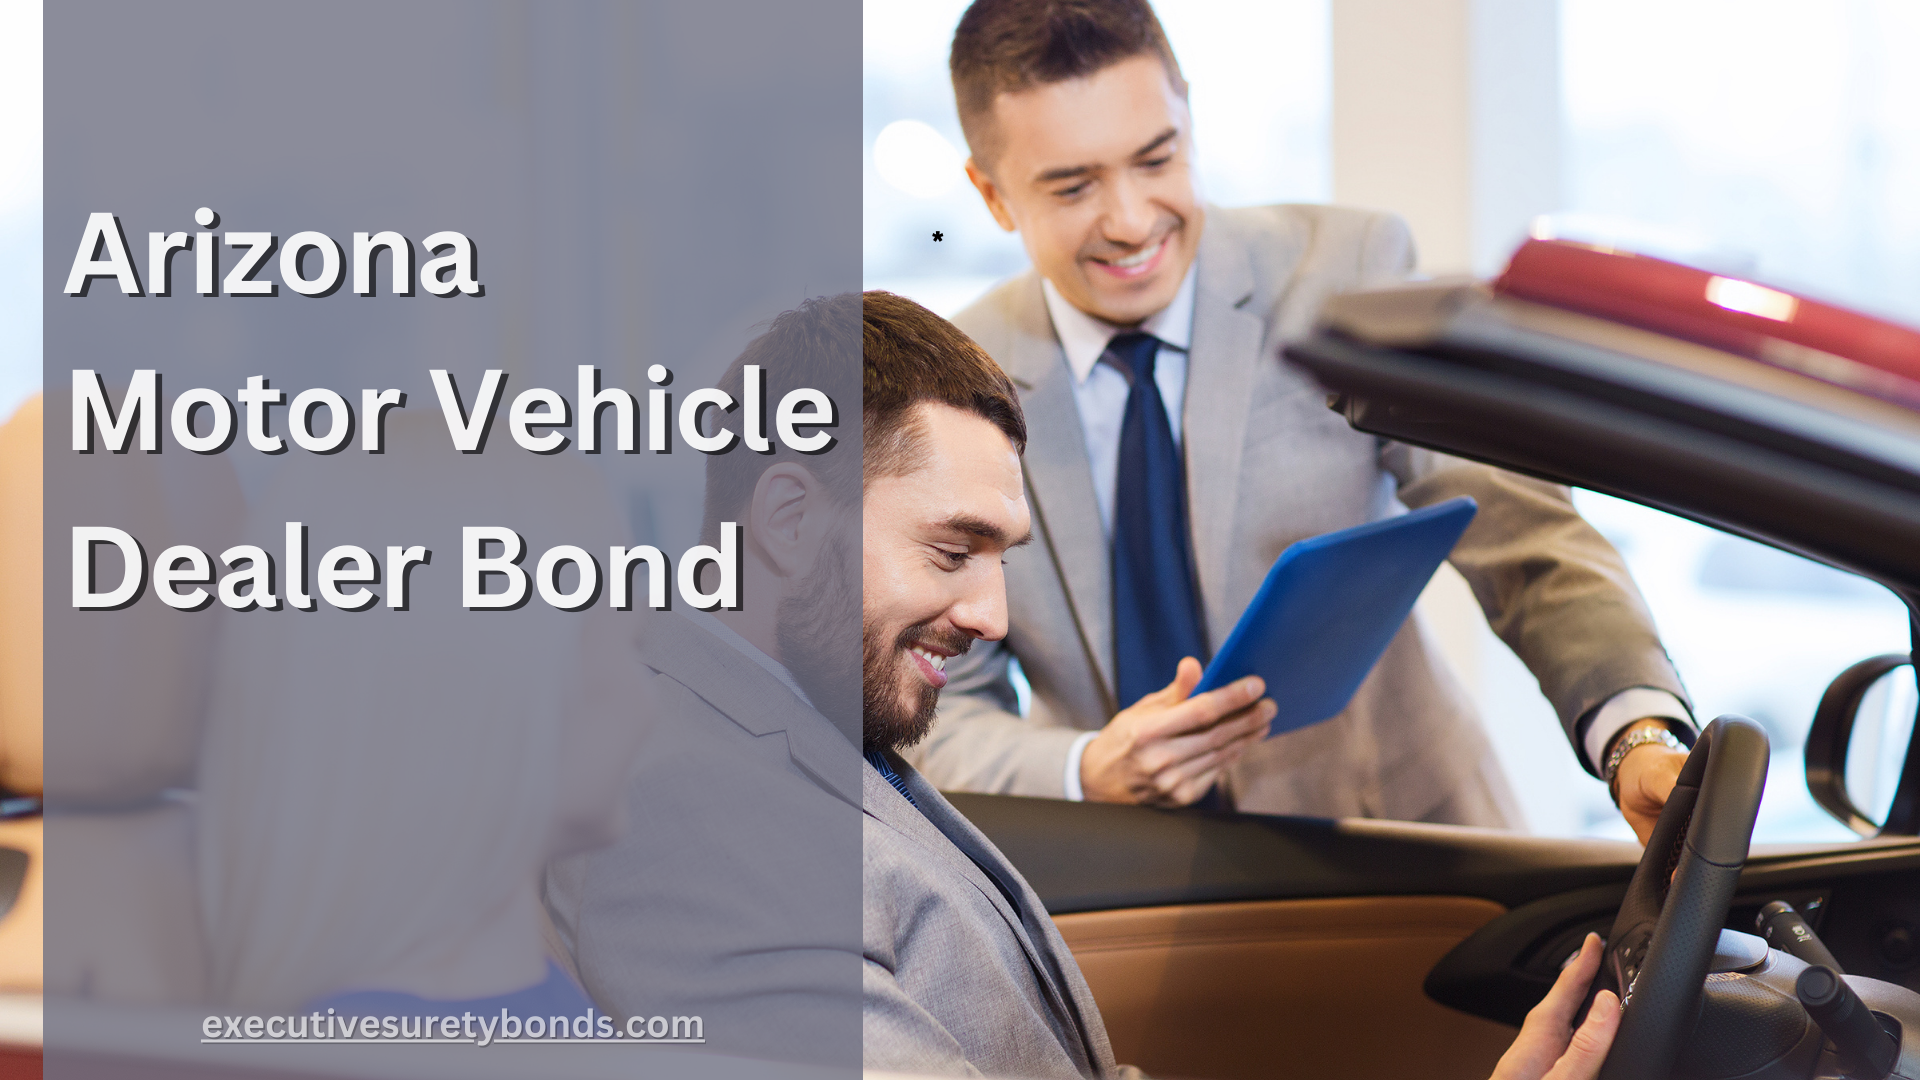 Arizona Motor Vehicle Dealer Bond